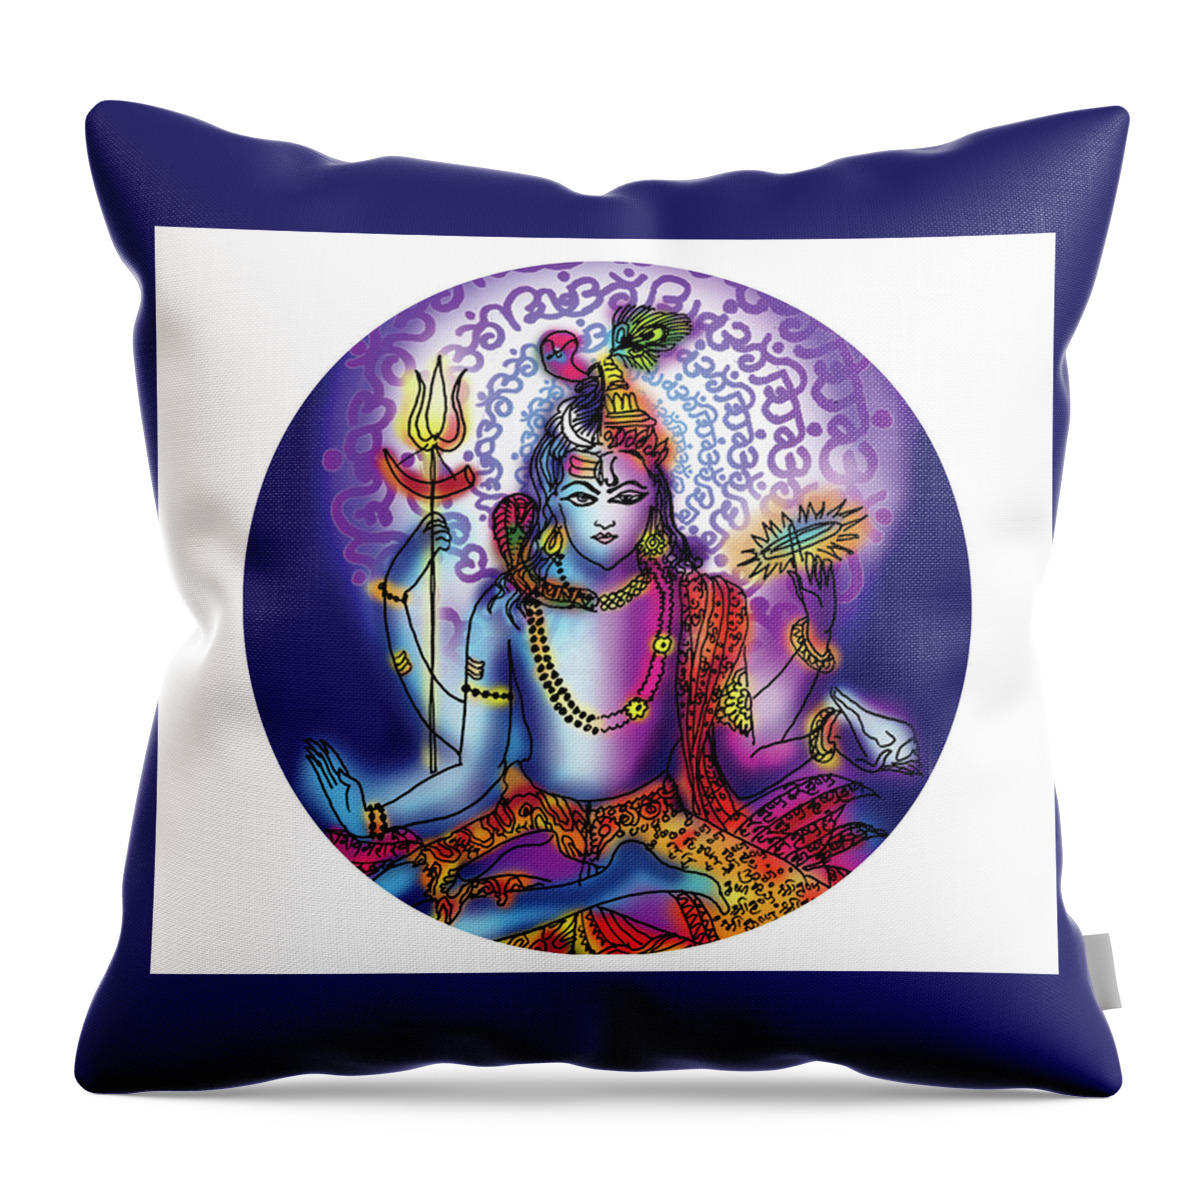 Shiva Throw Pillow featuring the painting Hari Hara Krishna Vishnu by Guruji Aruneshvar Paris Art Curator Katrin Suter